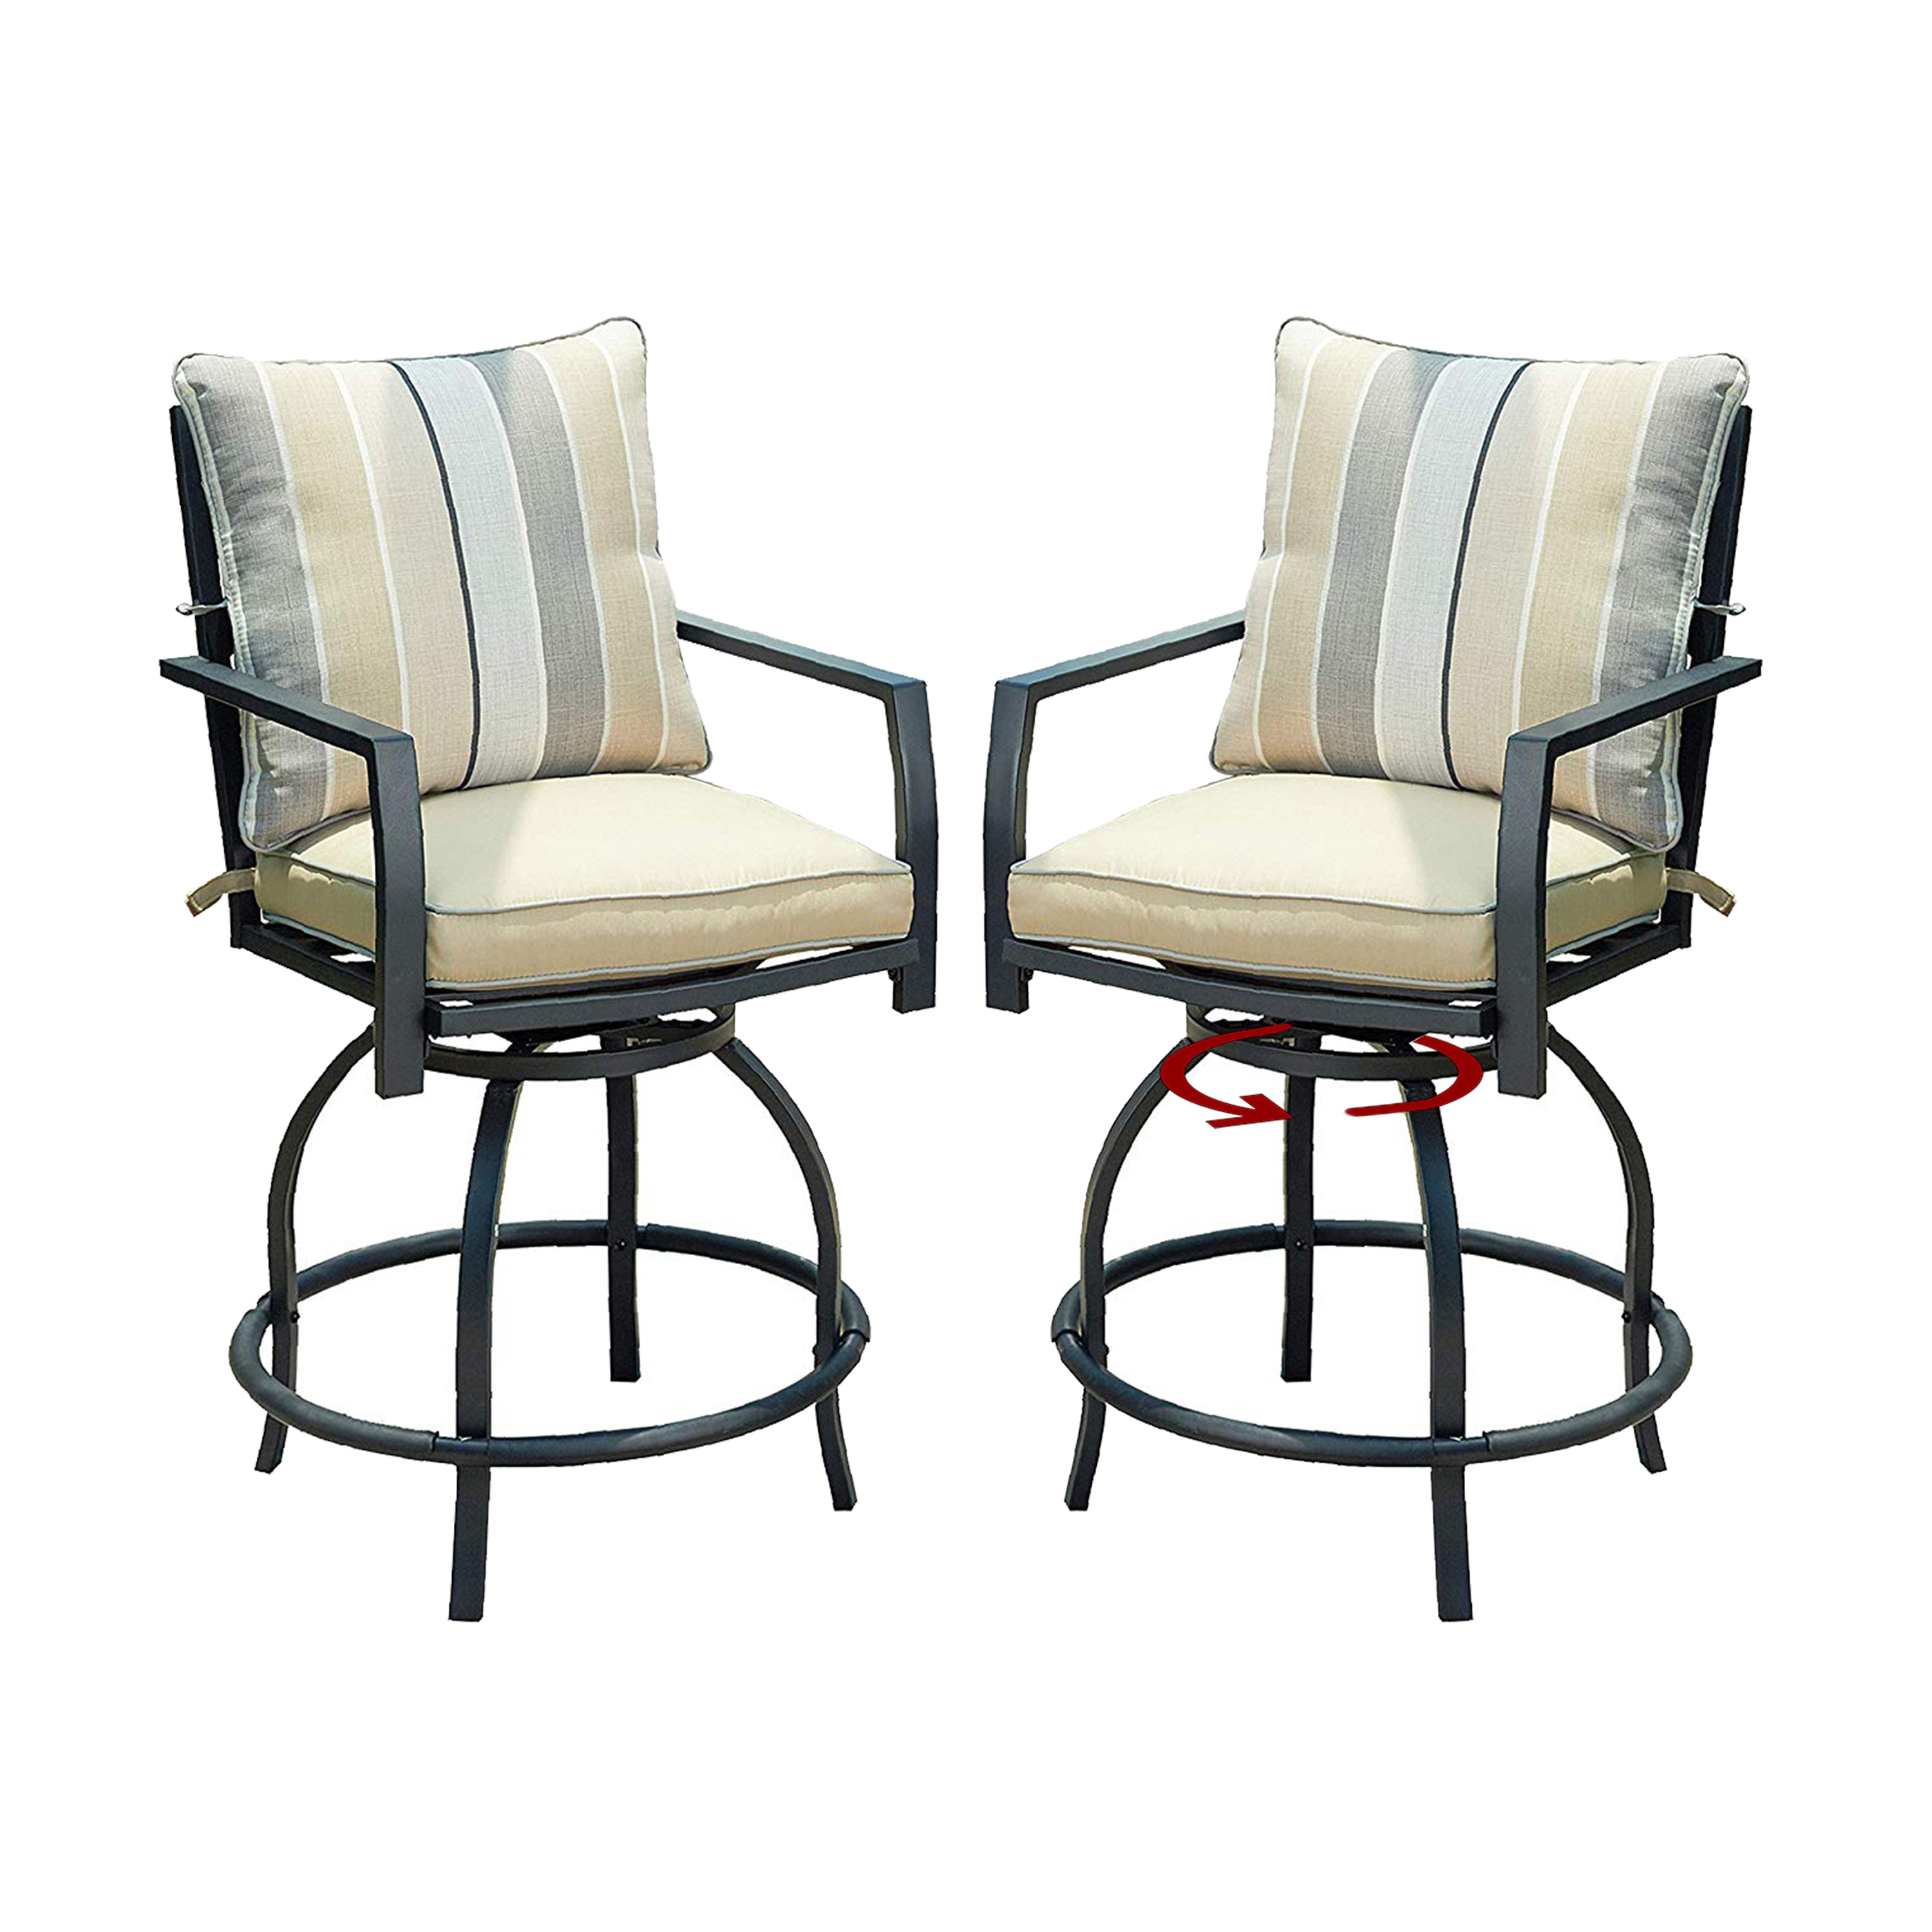 Metal Frame Swivel Bar Stool Chair, Outdoor Swivel Bar Stools With Backs